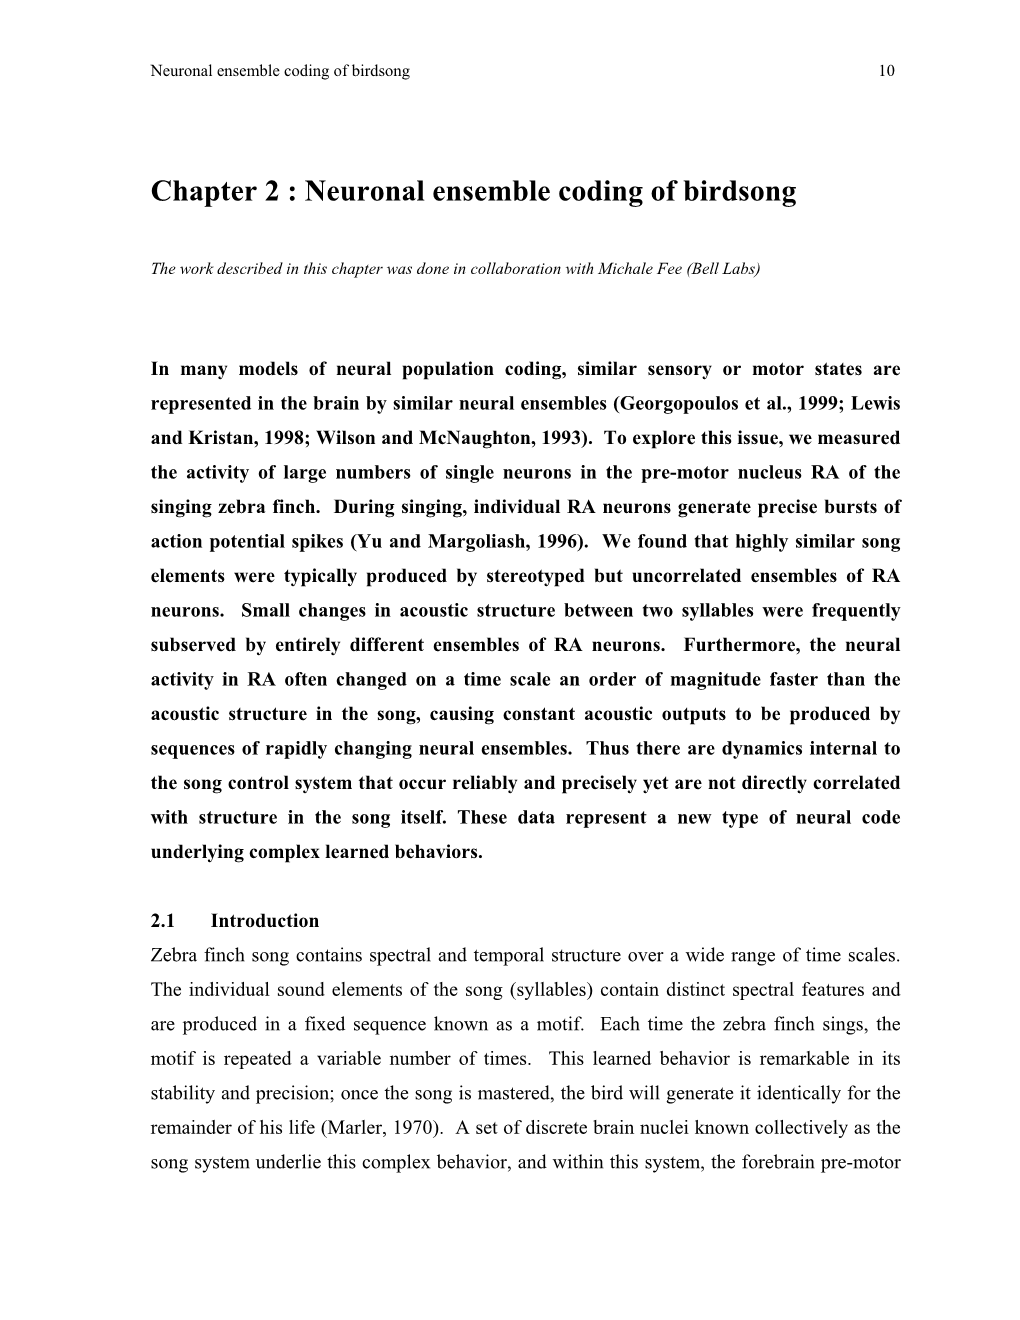 Neuronal Ensemble Coding of Birdsong 10